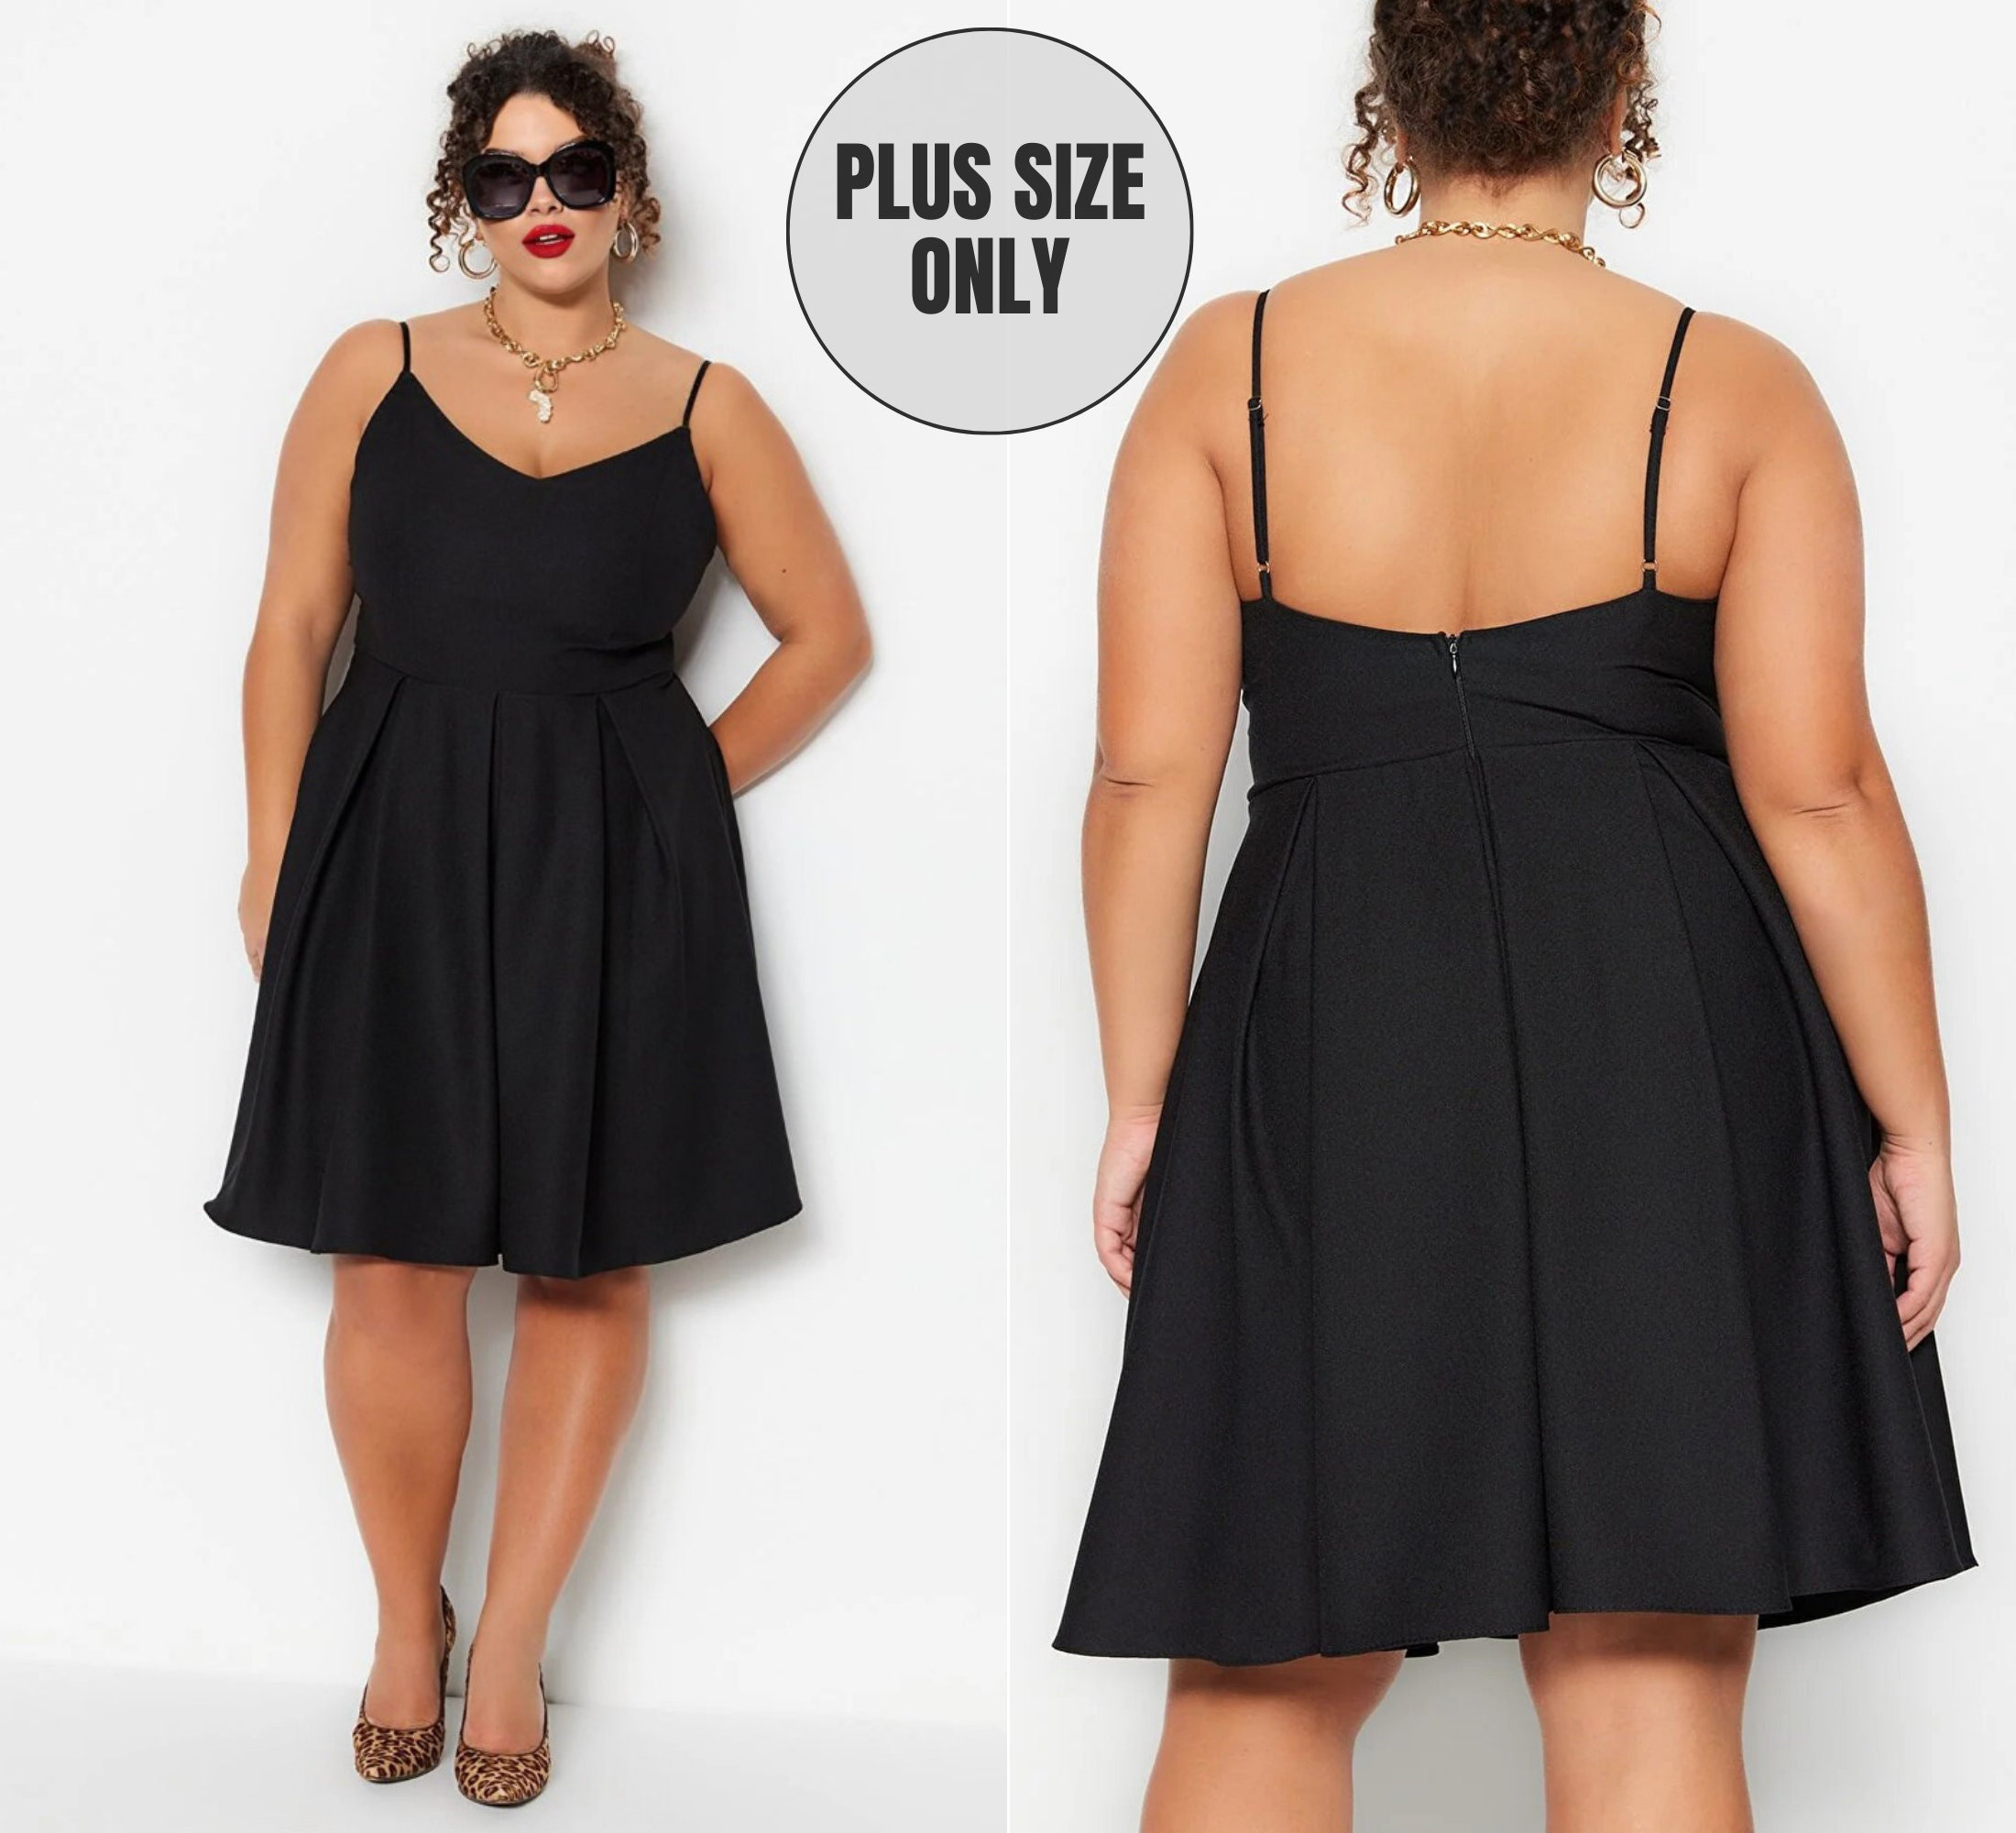 Black A-line Size Dress Casual Plus Size Dress for